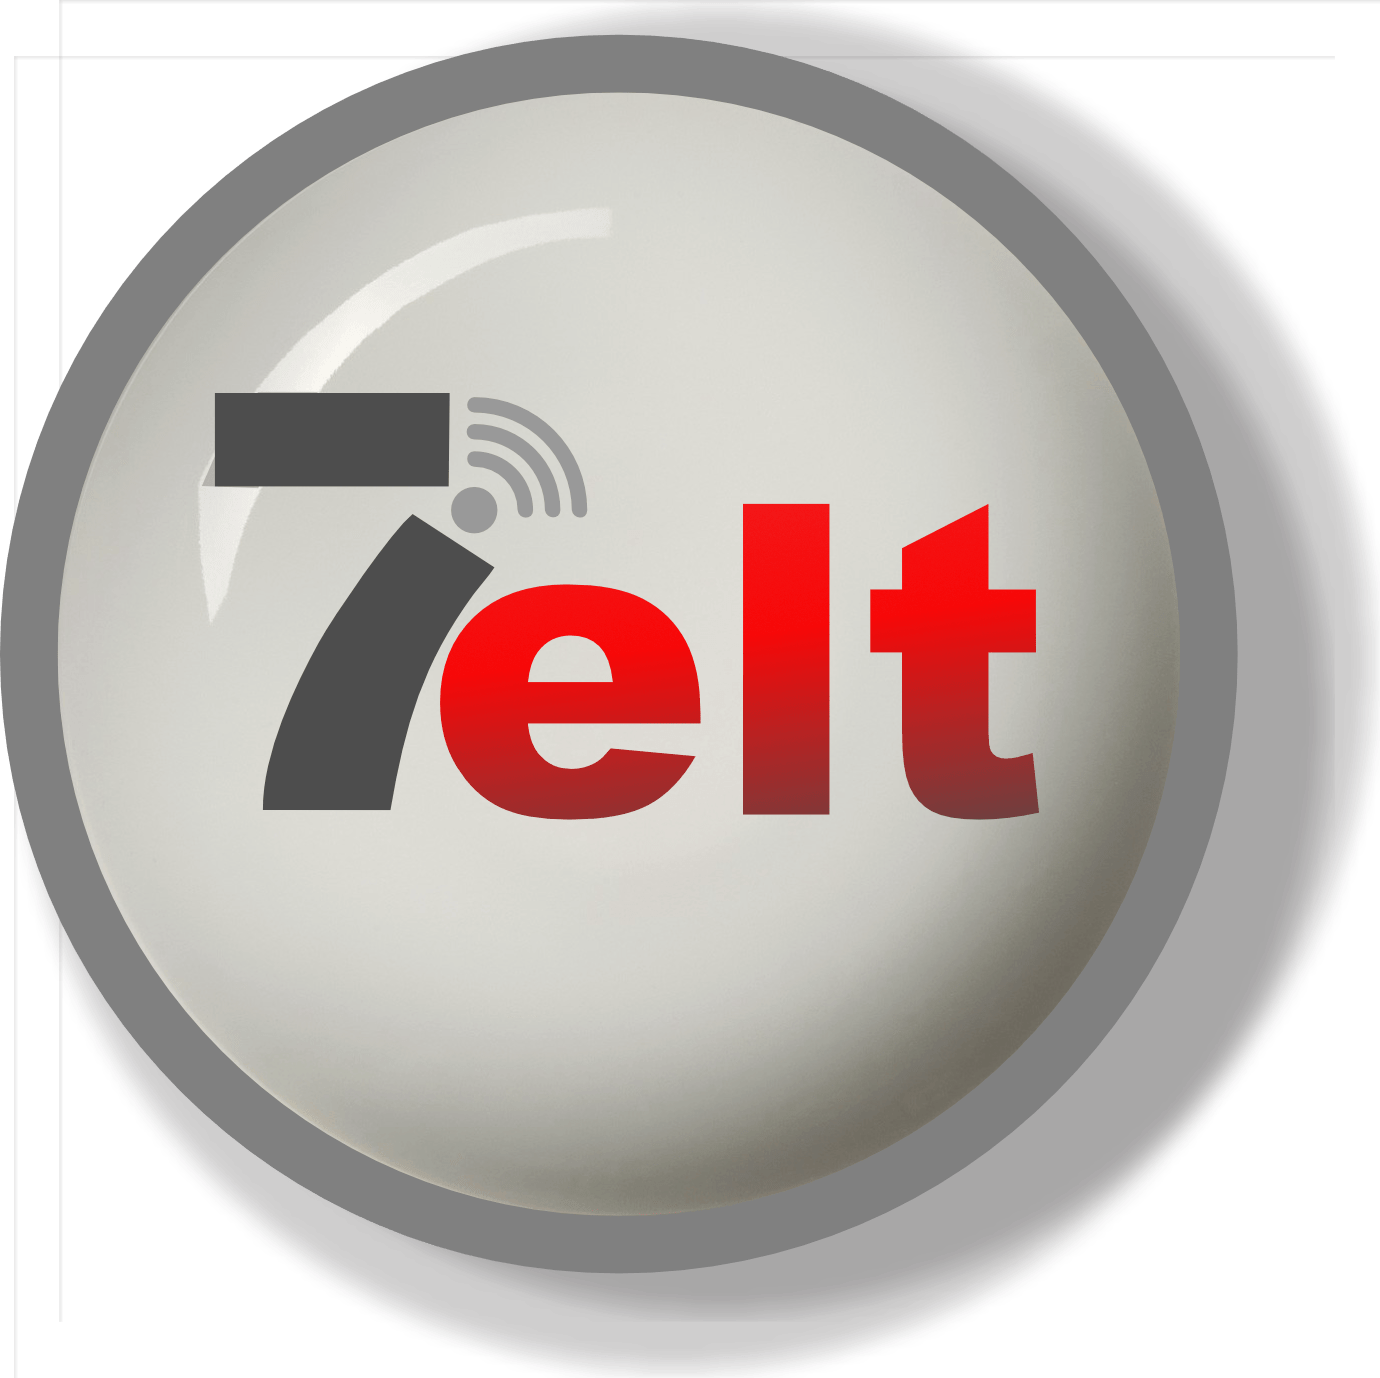 7 Elt Car Electronic Solutions